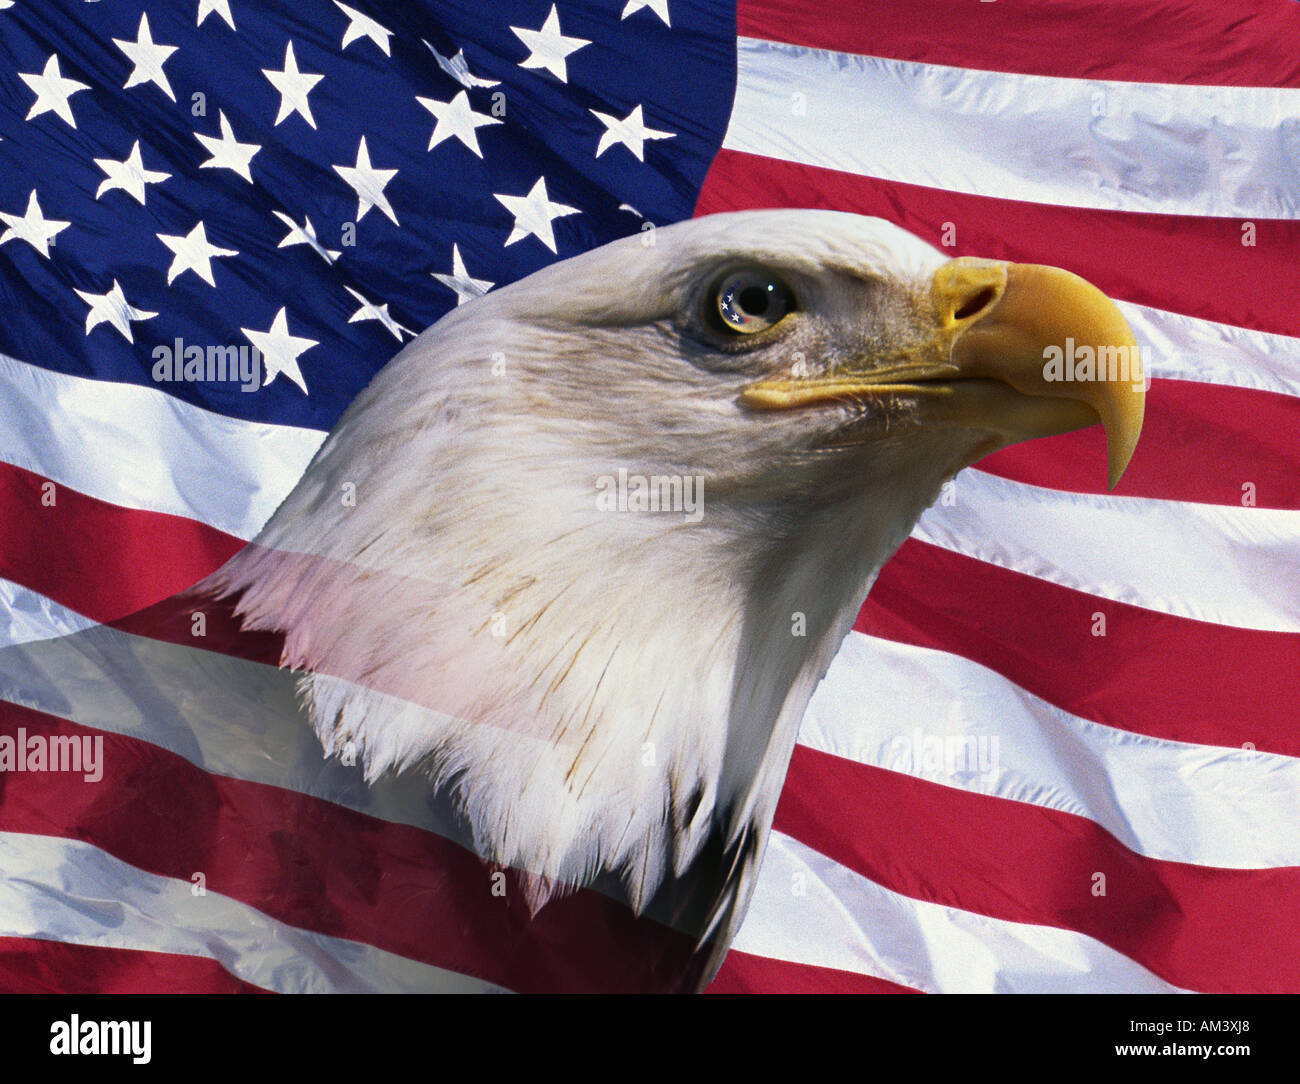 https://c8.alamy.com/compfr/am3xj8/montage-photo-american-bald-eagle-et-drapeau-americain-am3xj8.jpg